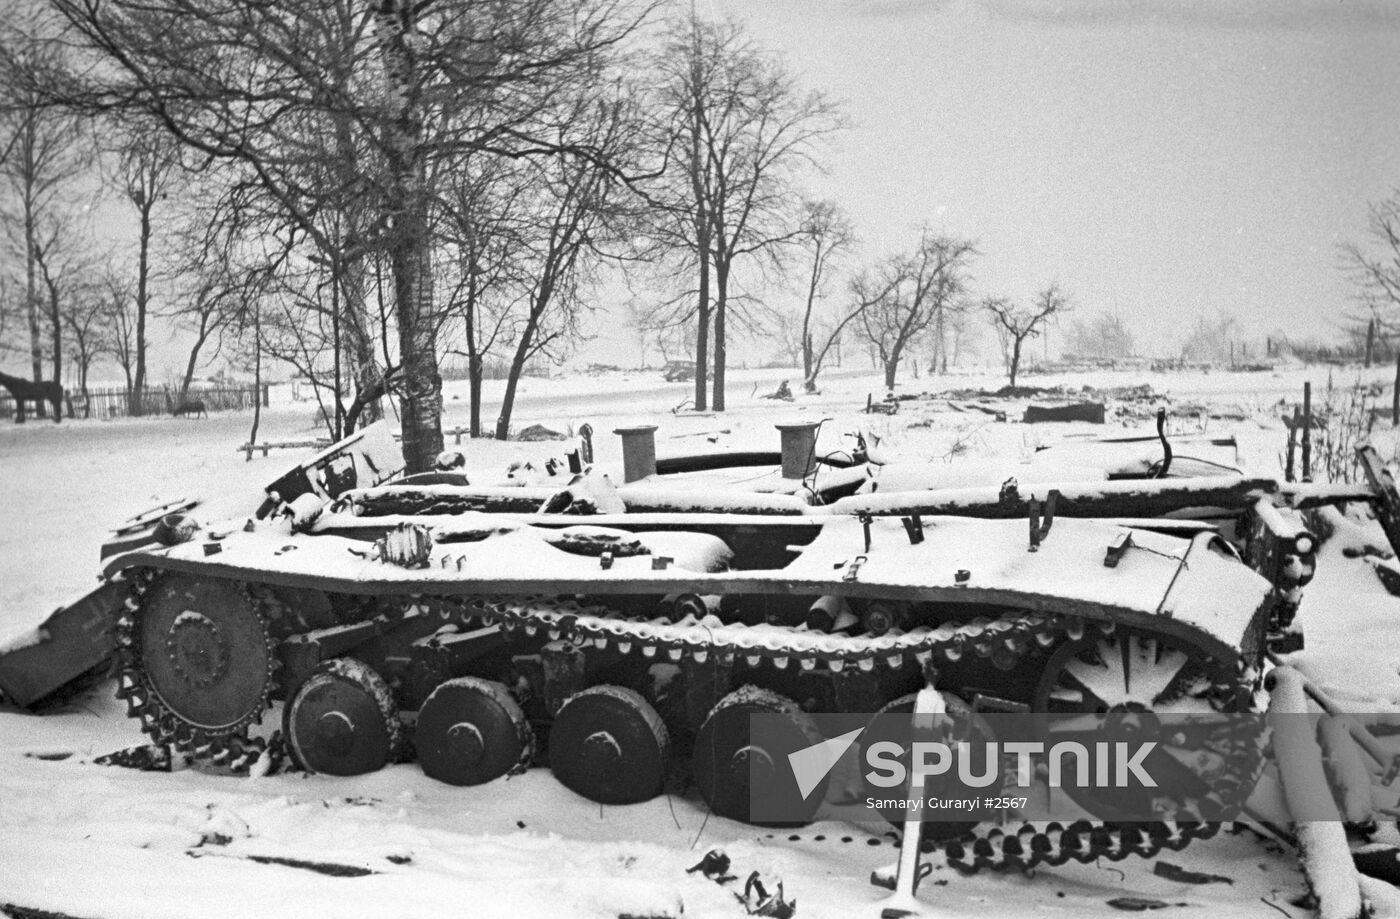 WWII TANK T-34